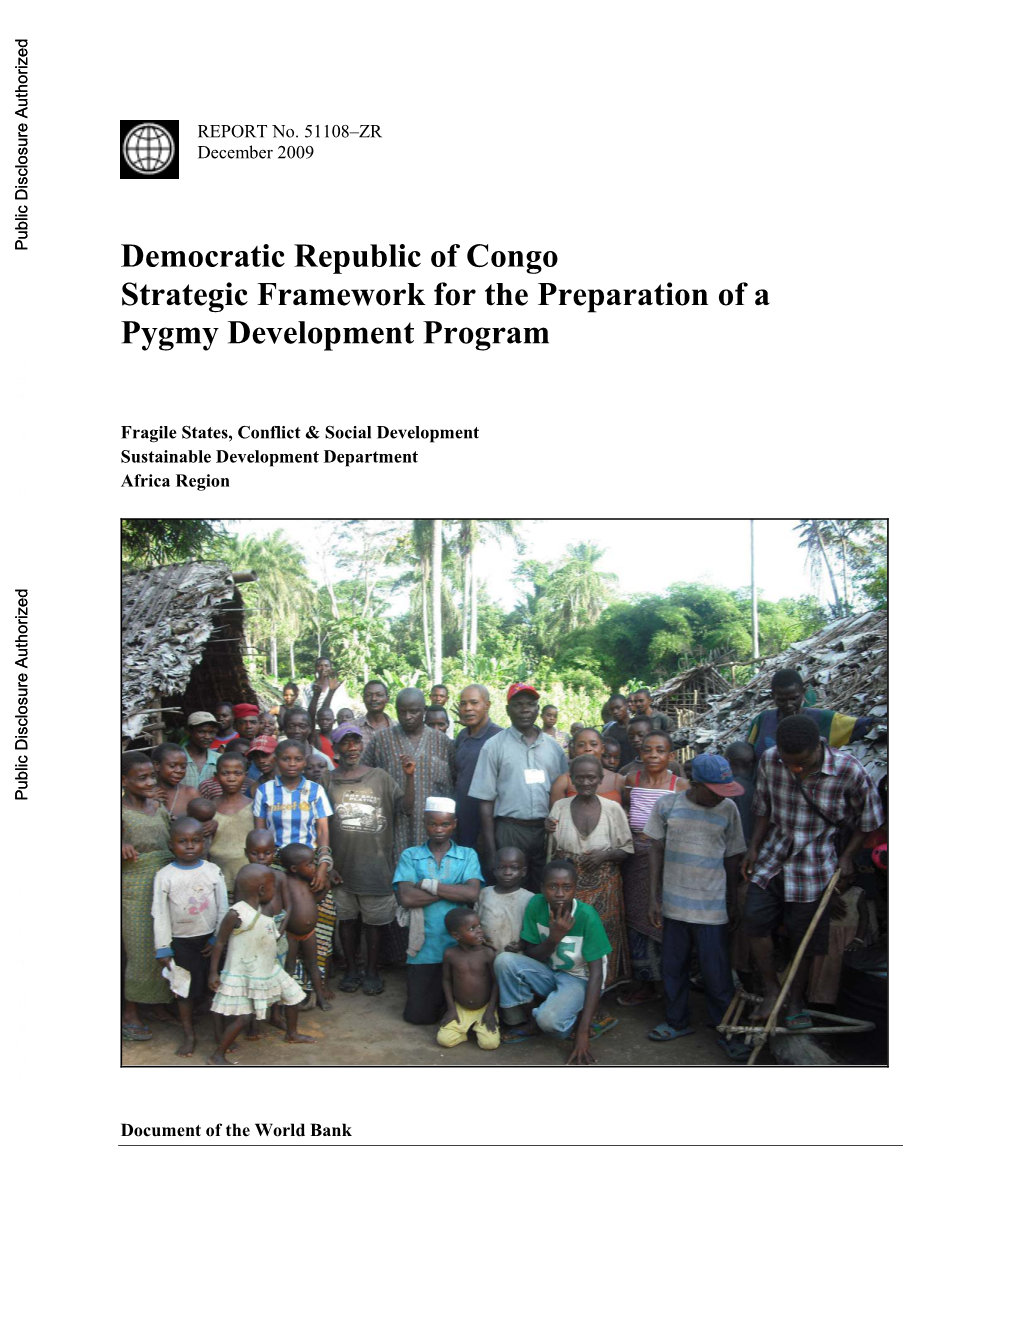 Democratic Republic of Congo Strategic Framework for the Preparation of a Pygmy Development Program